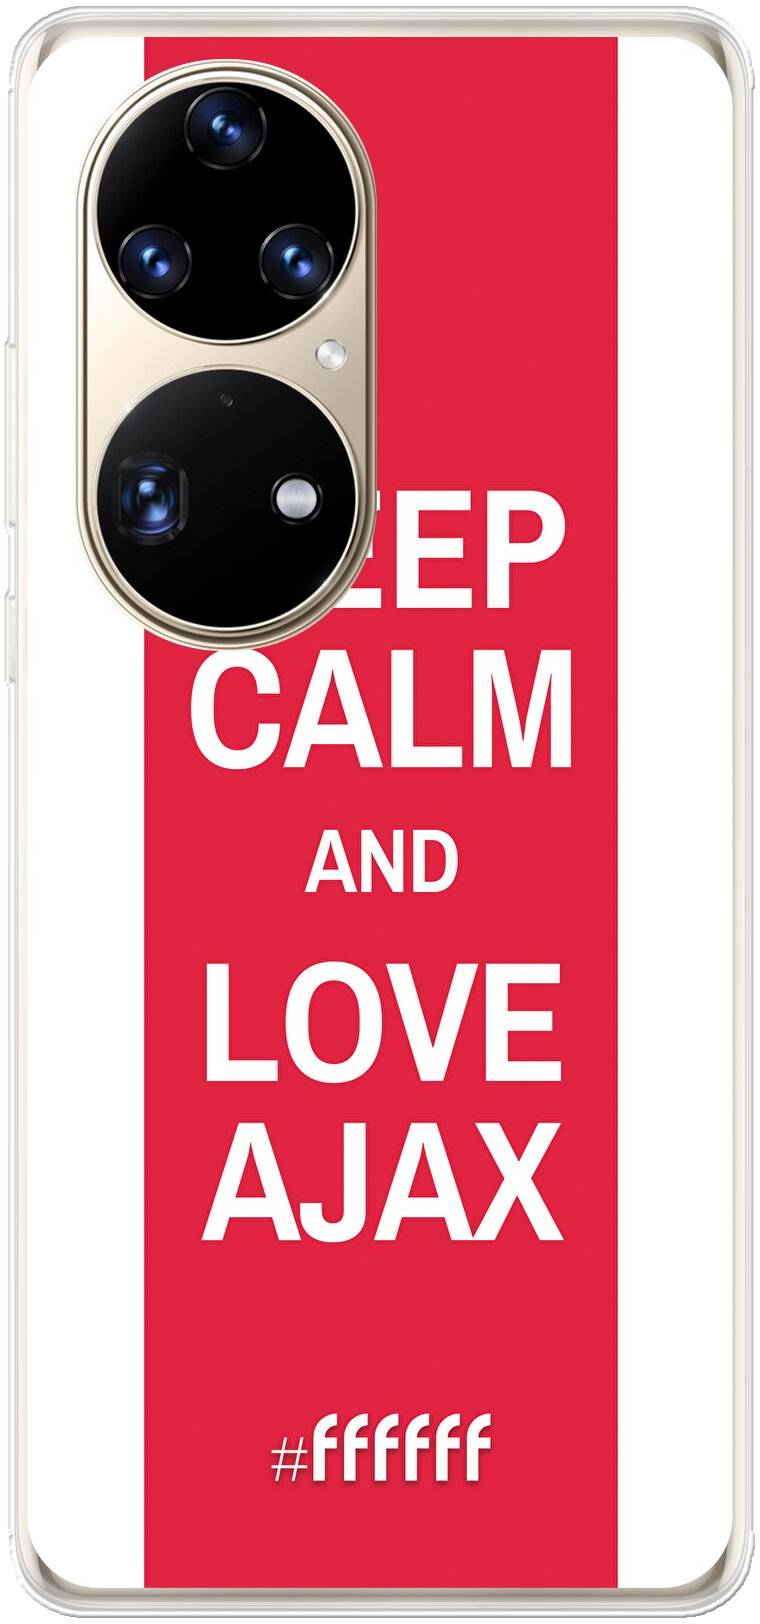 AFC Ajax Keep Calm P50 Pro